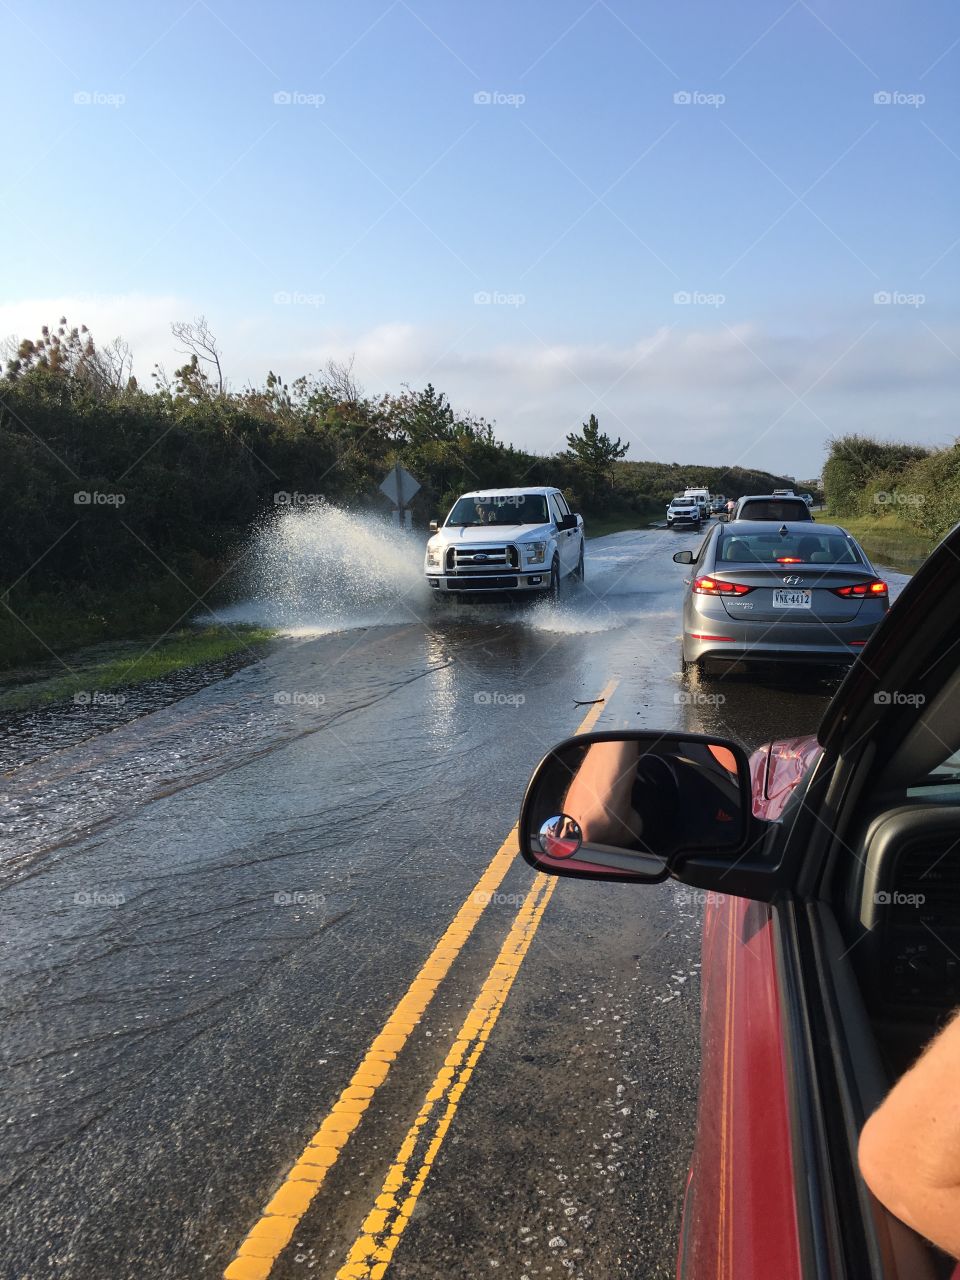 Road Flooding